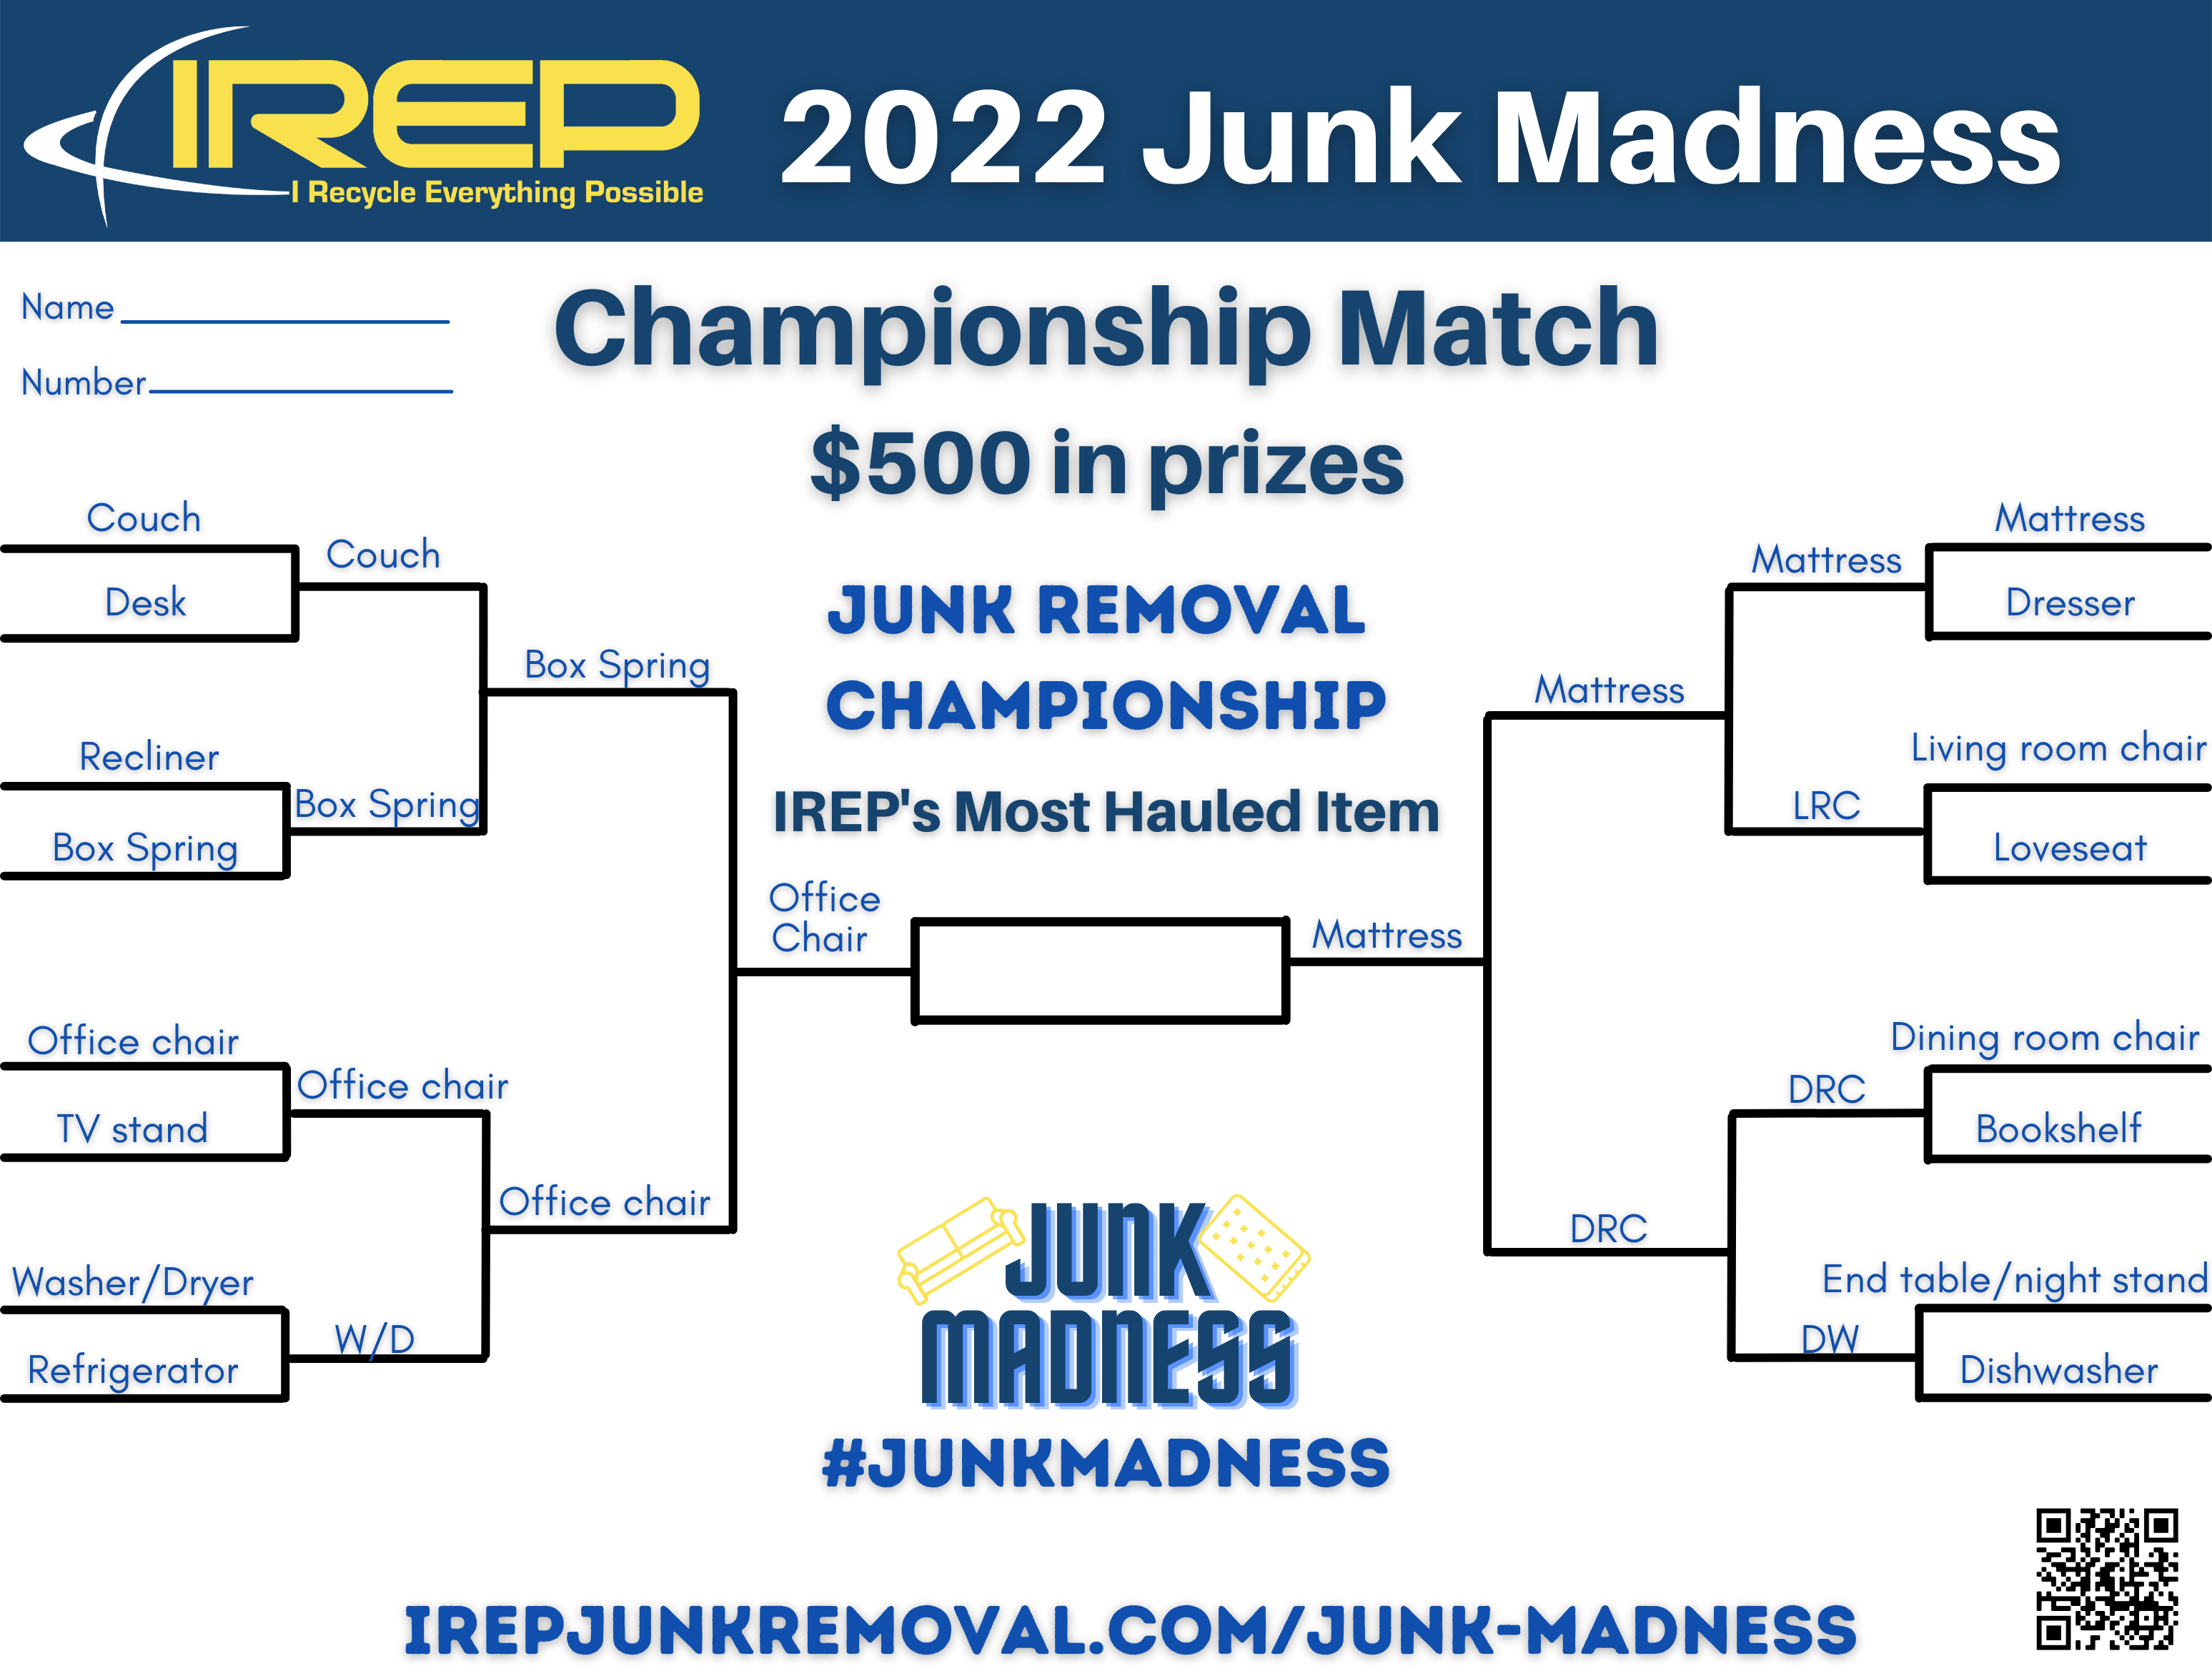 IREP Junk Madness 2022 Brackets championship march basketball free play prizes